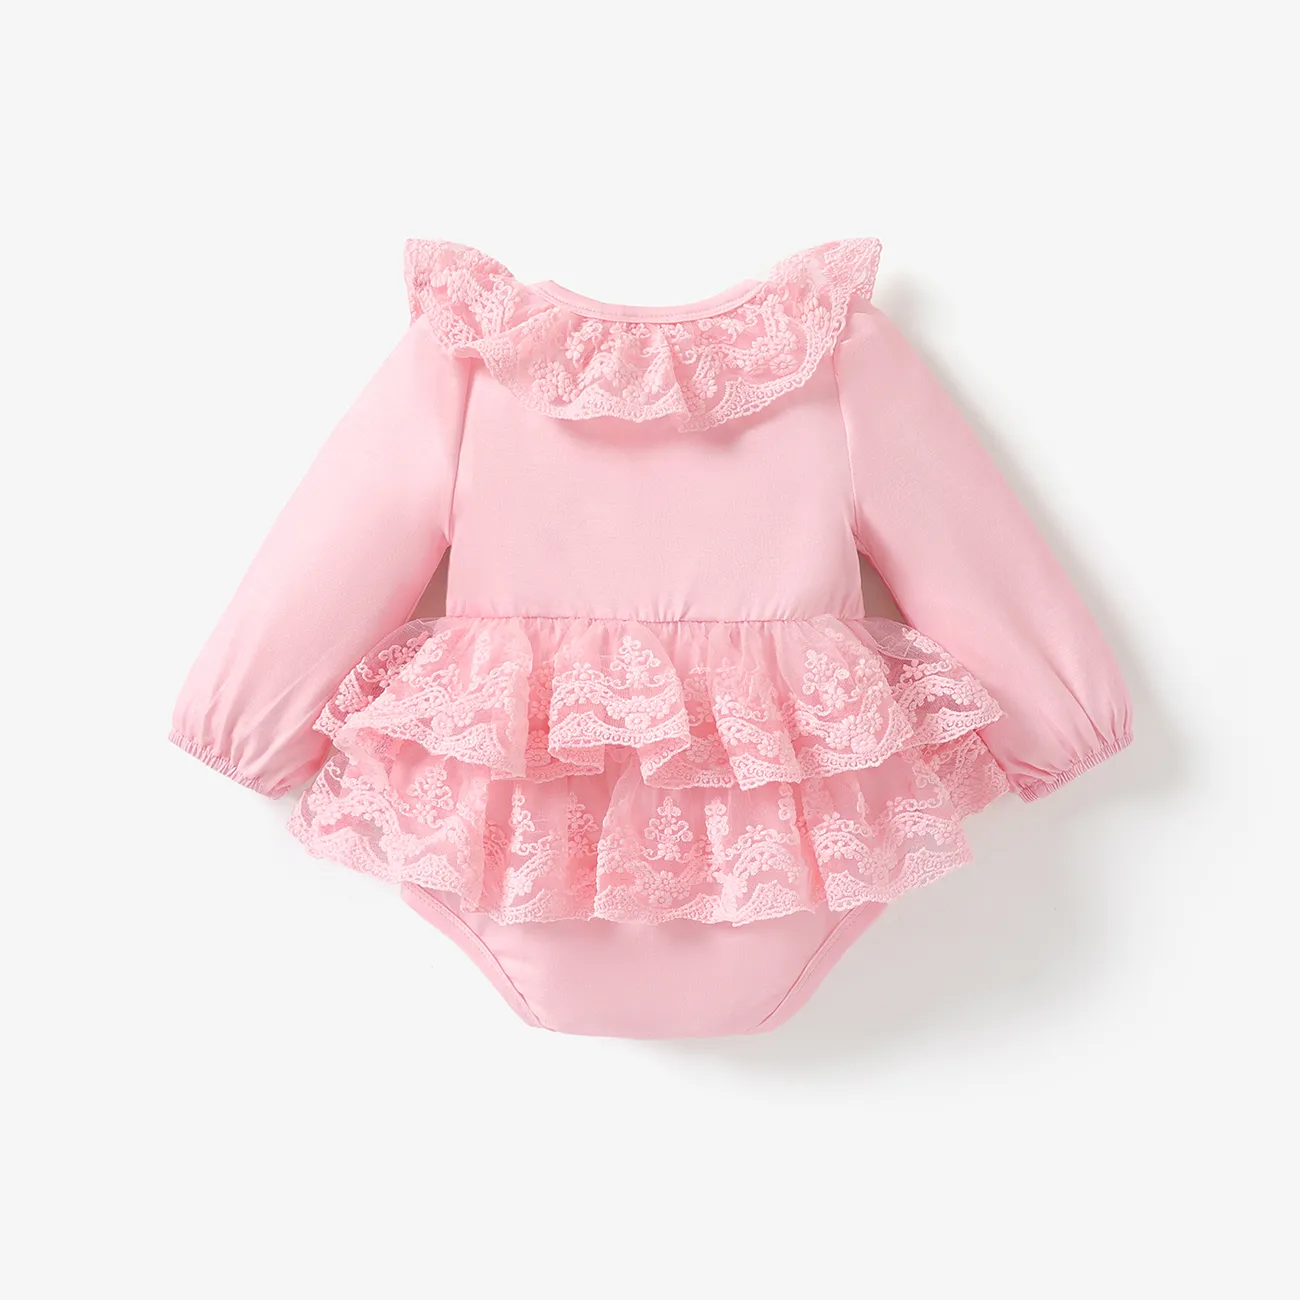 Baby Girl Naia Sweet Bowknot Solid Color Ruffle Edge Romper Pink big image 1